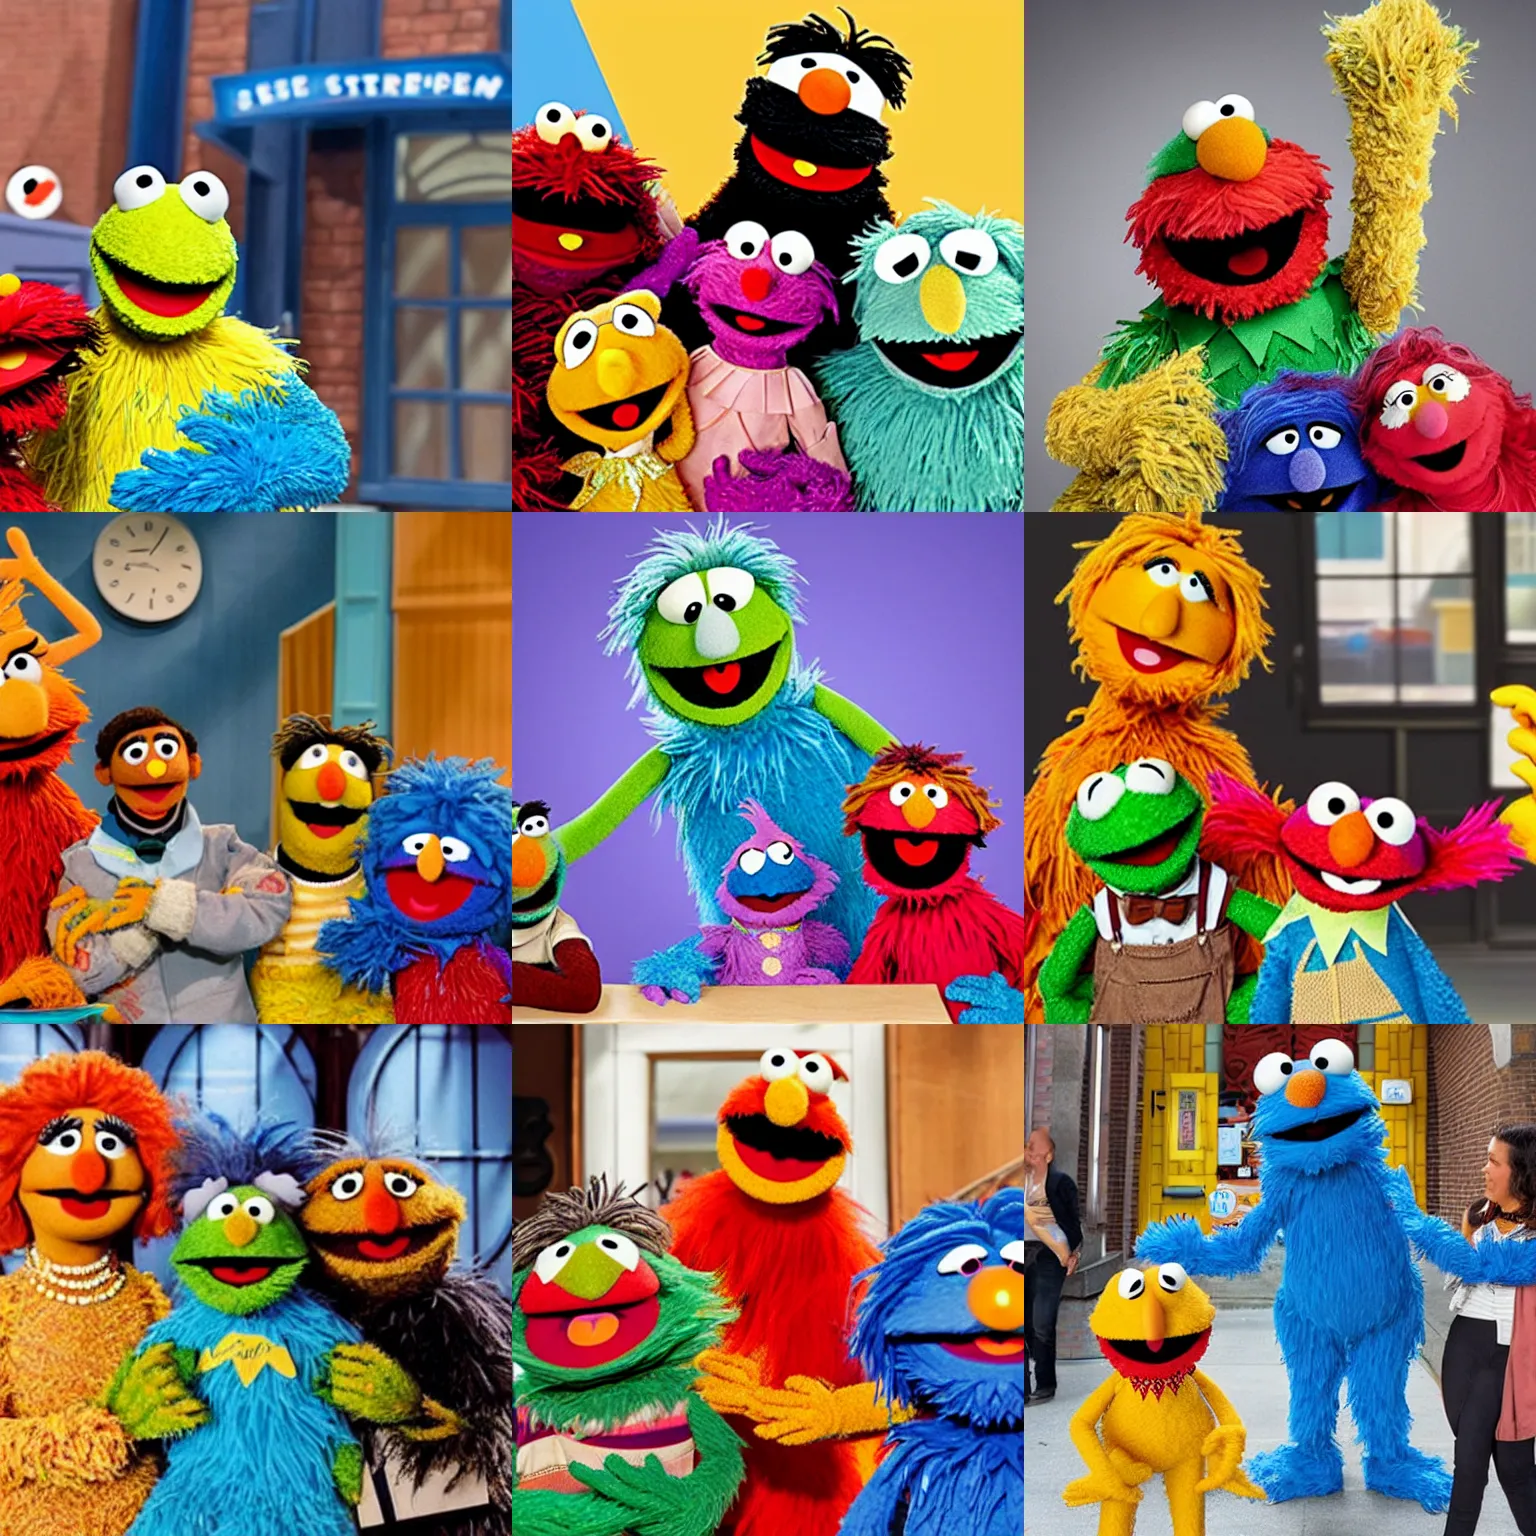 Prompt: new Sesame Street Muppet named Fartso